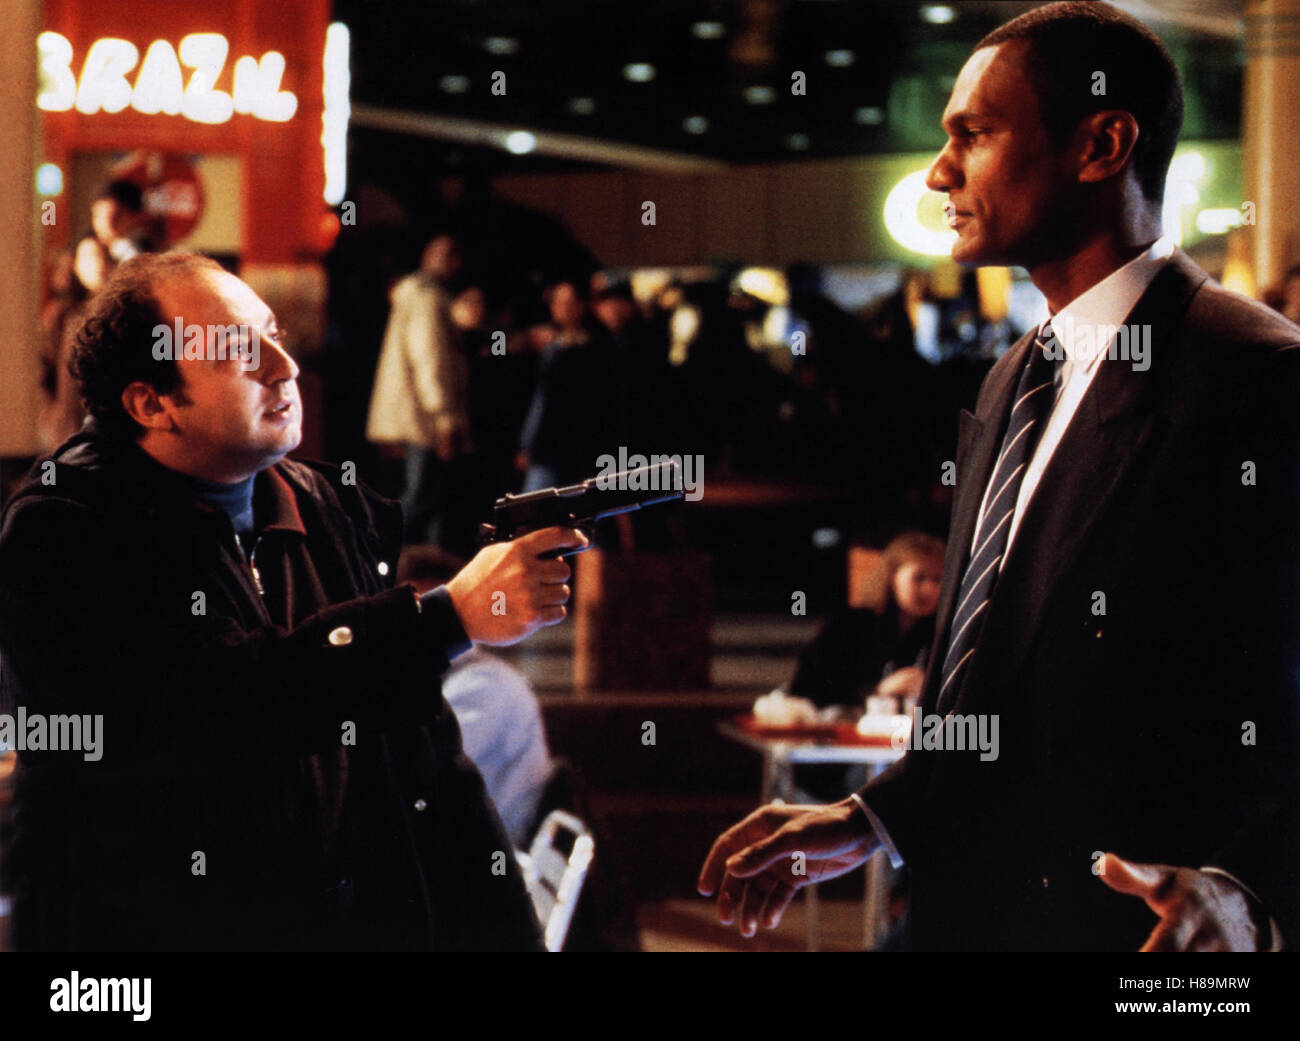 Jenseits aller Regeln, (LE COUSIN) F 1998, Regie: Alain Corneau, PATRICK TIMSIT, Stichwort: Waffe, Revolver, Bedrohung Stock Photo